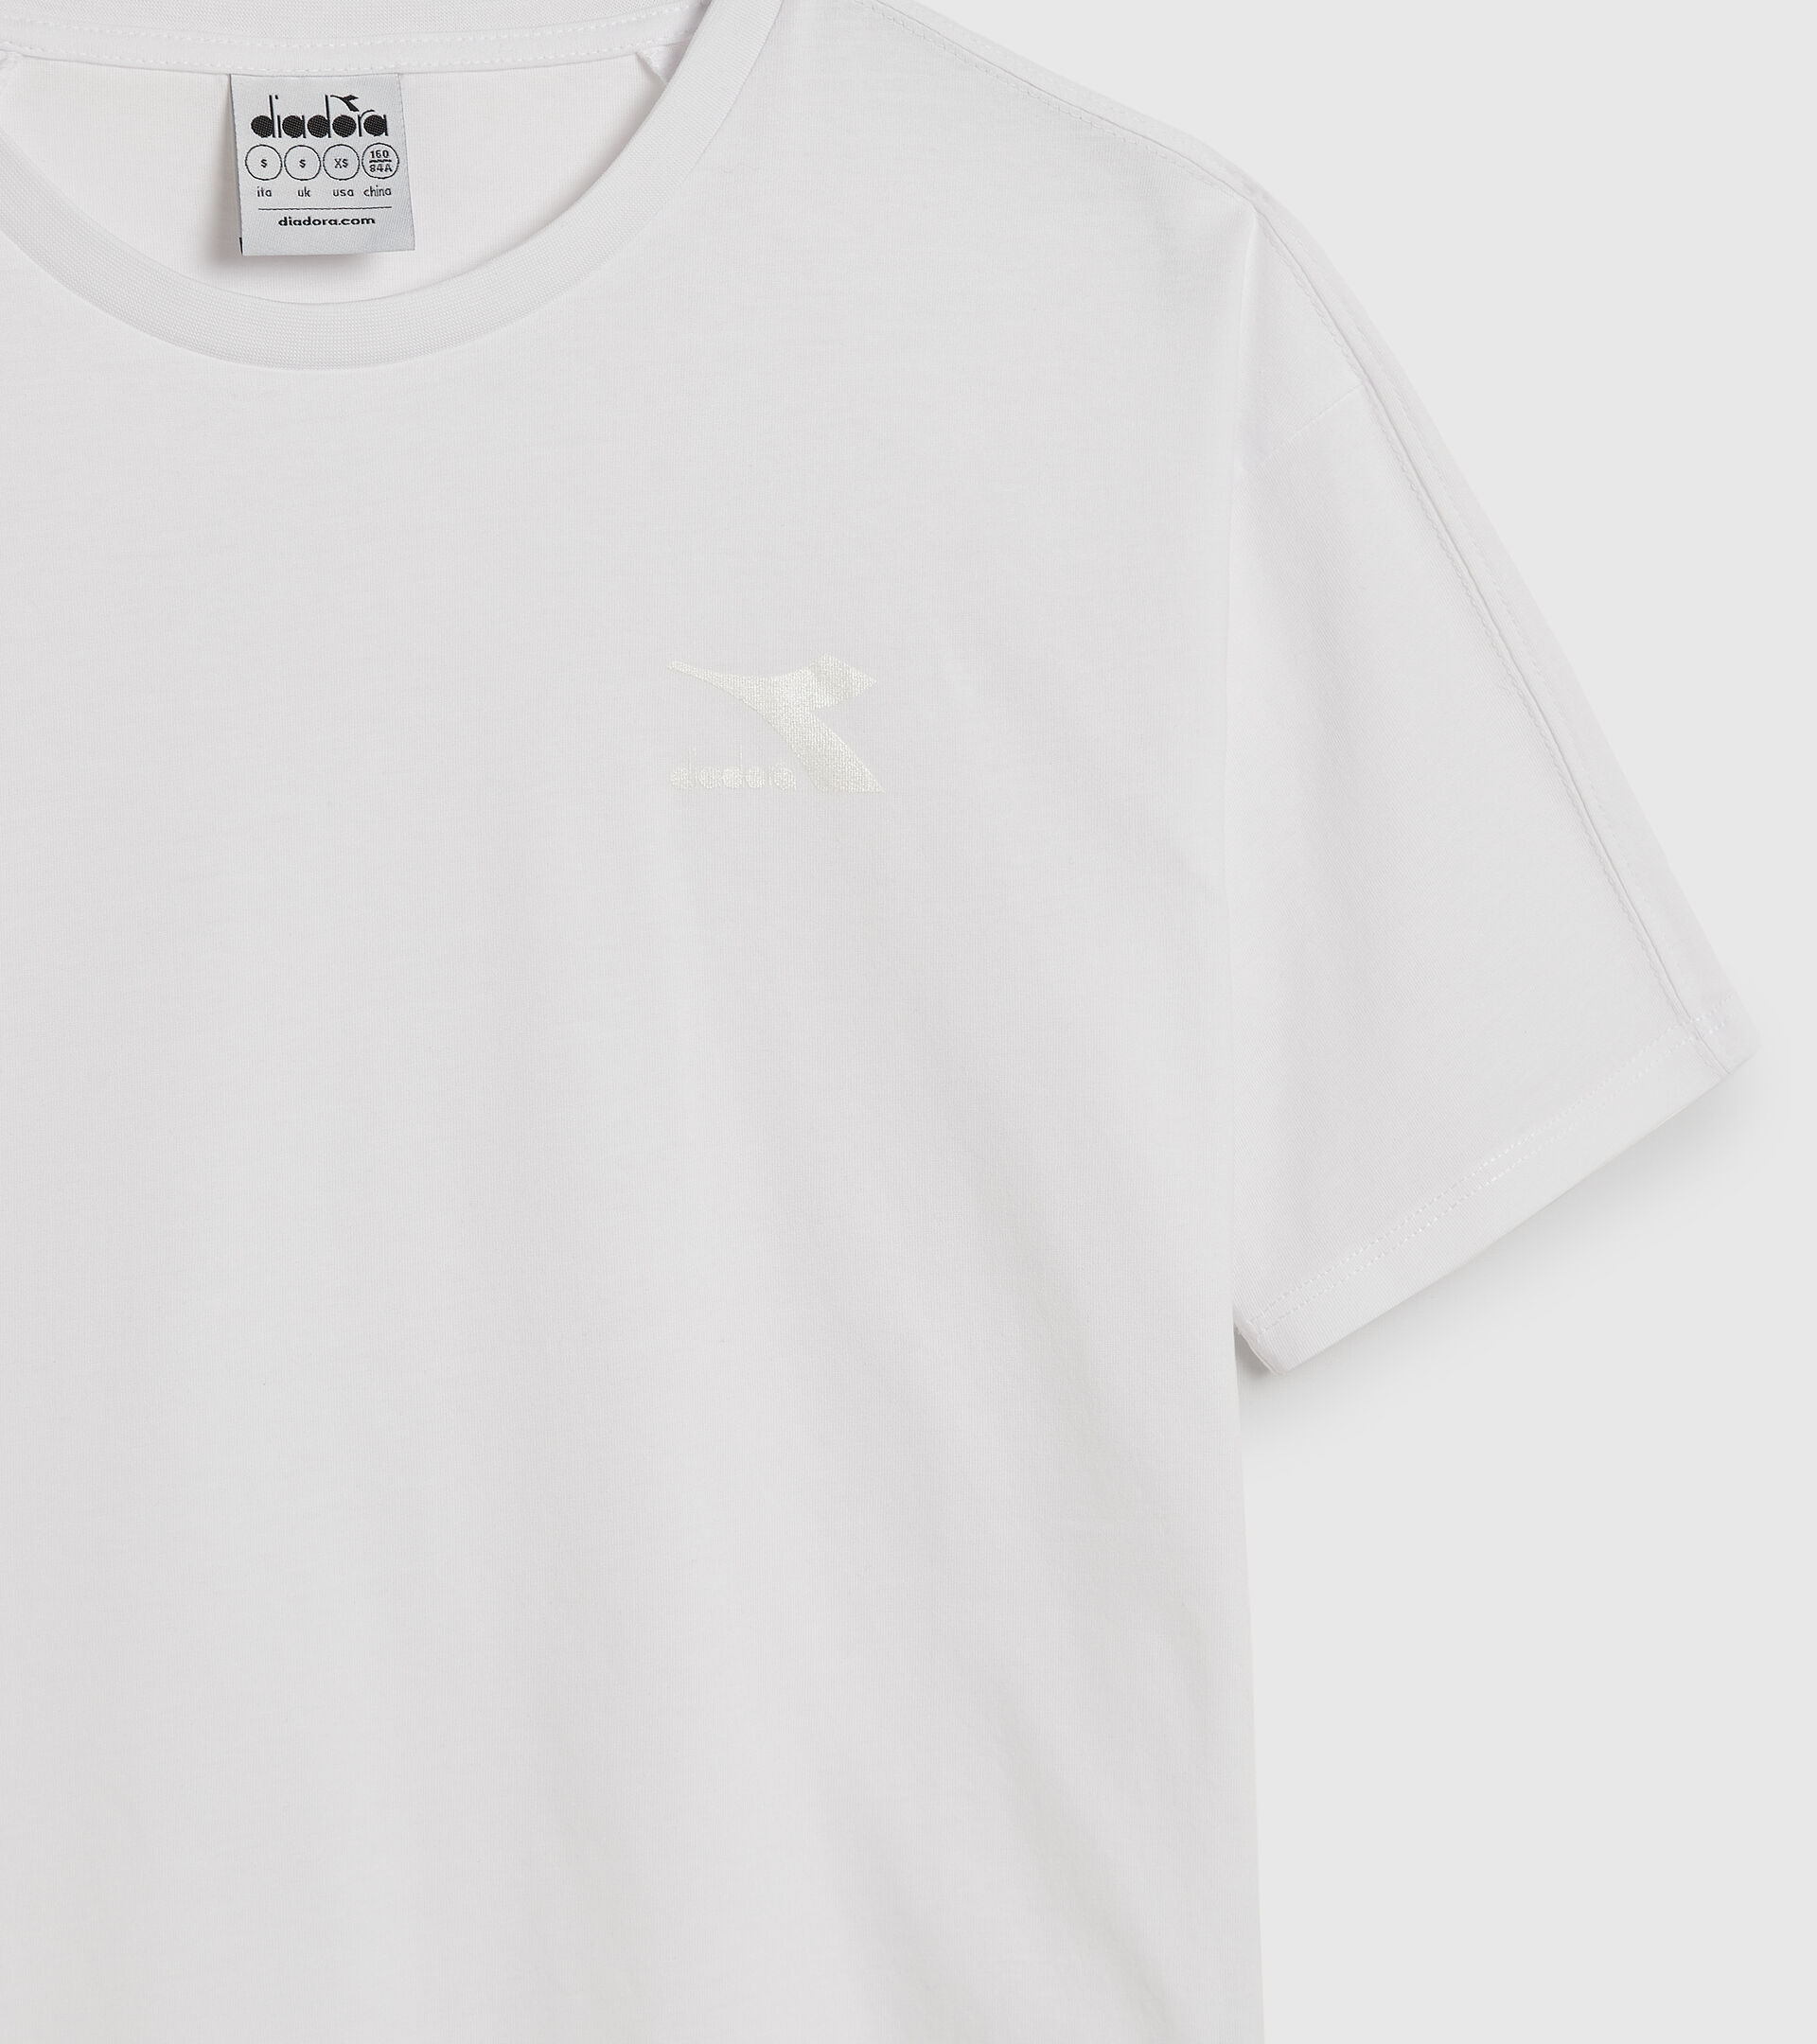 Cotton sports T-shirt - Women L.T-SHIRT SS CHROMIA OPTICAL WHITE - Diadora